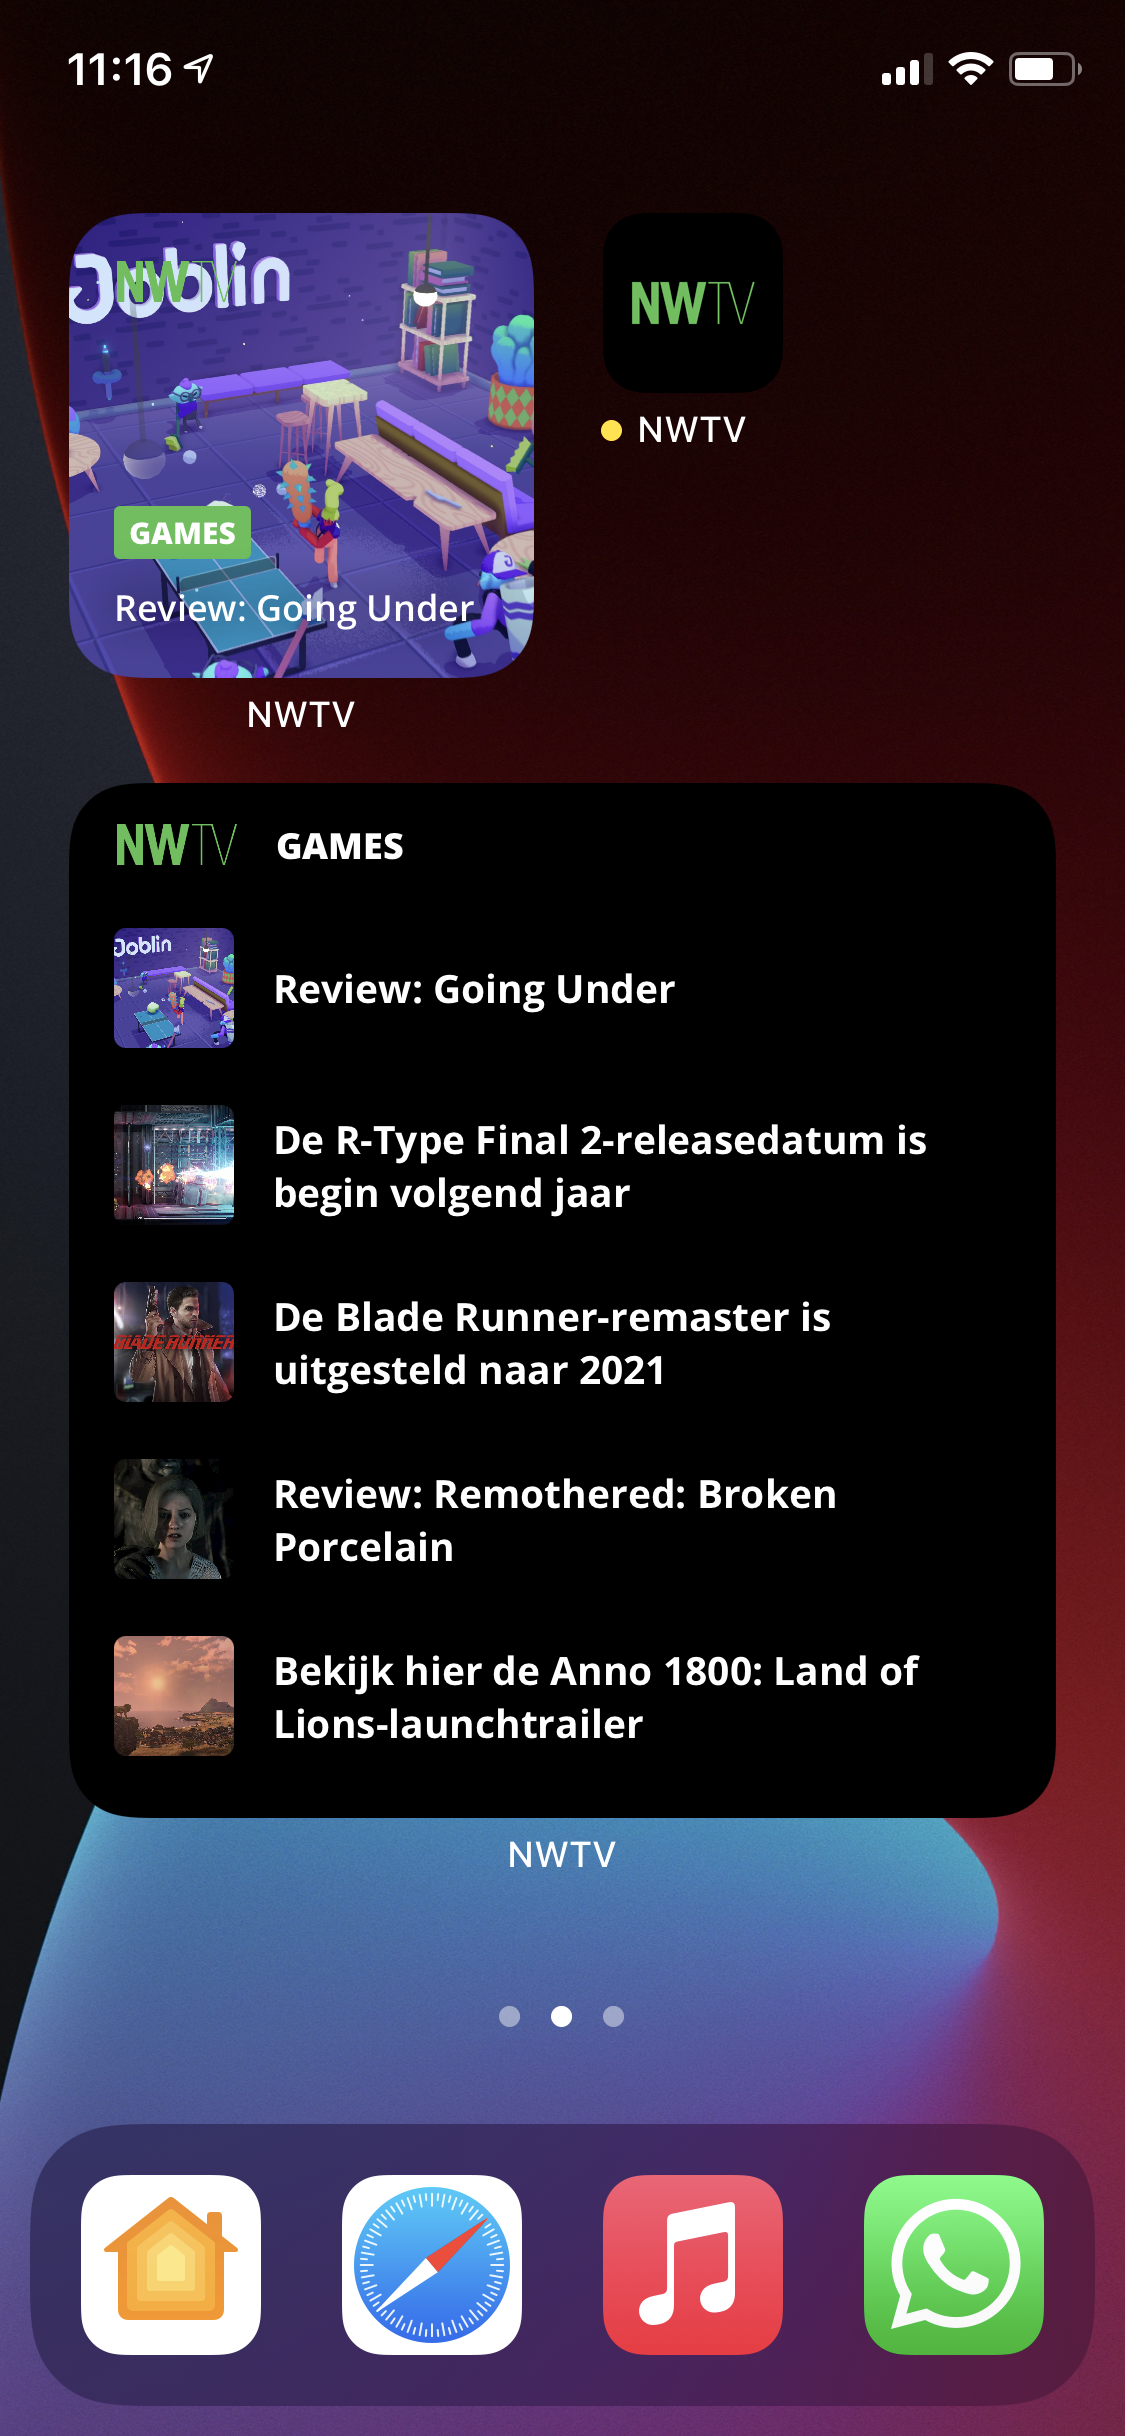 NWTV-app screen #3